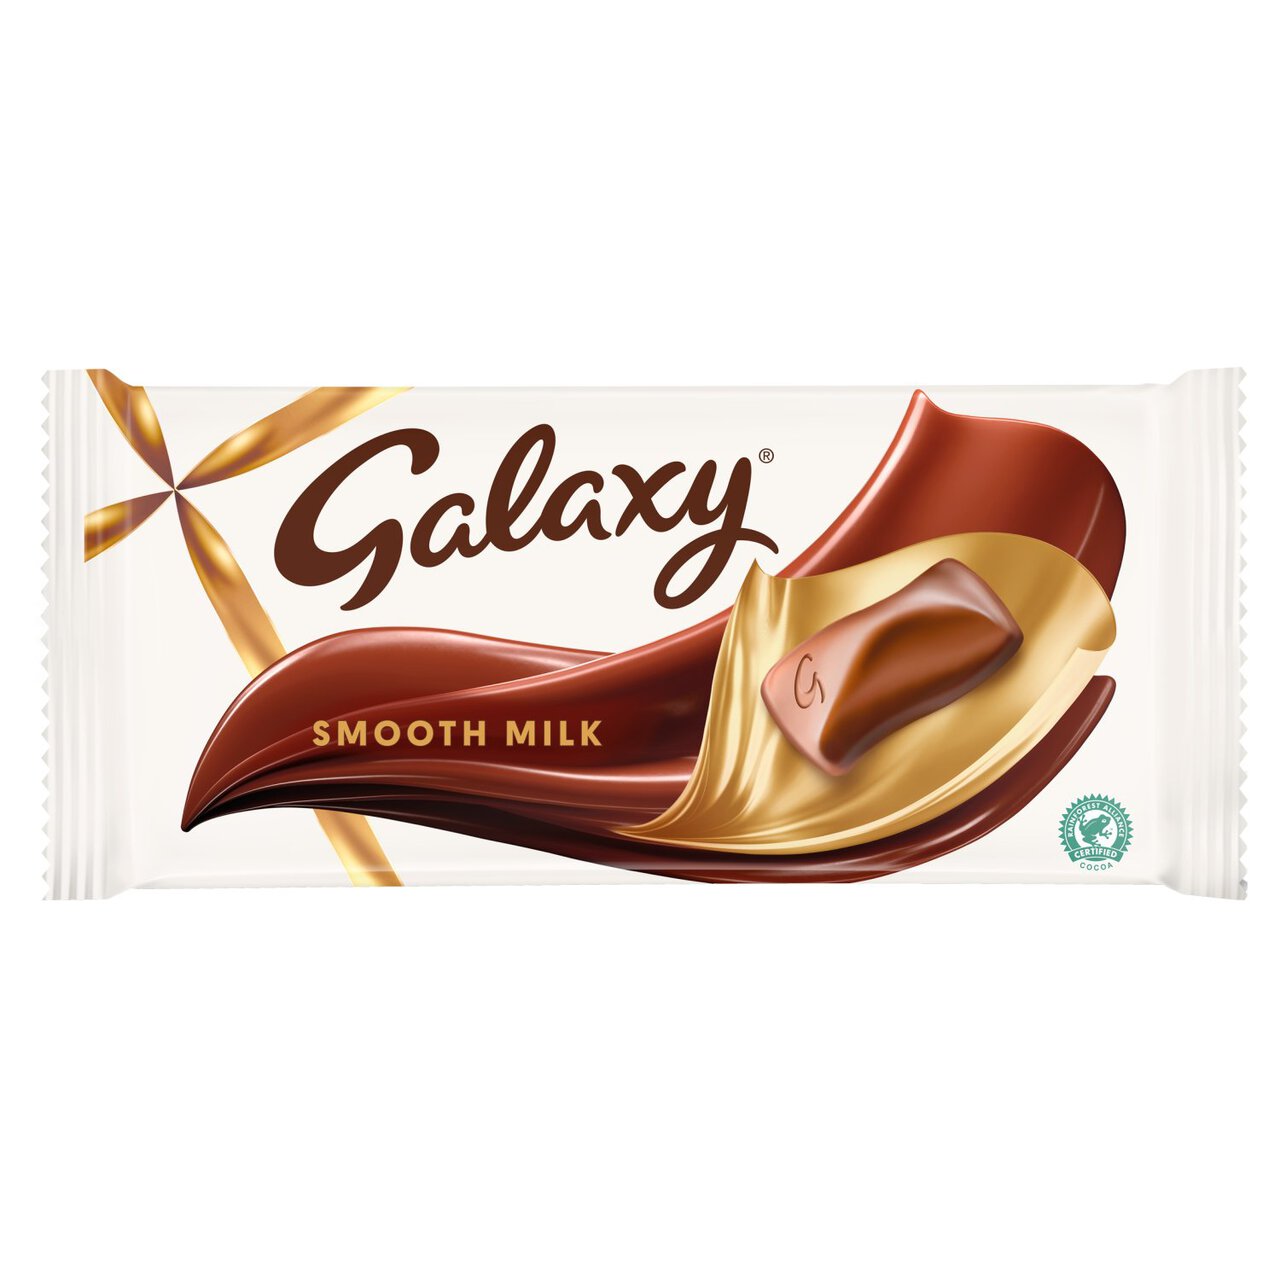 Galaxy Smooth Milk Chocolate Sharing Block Bar 360g